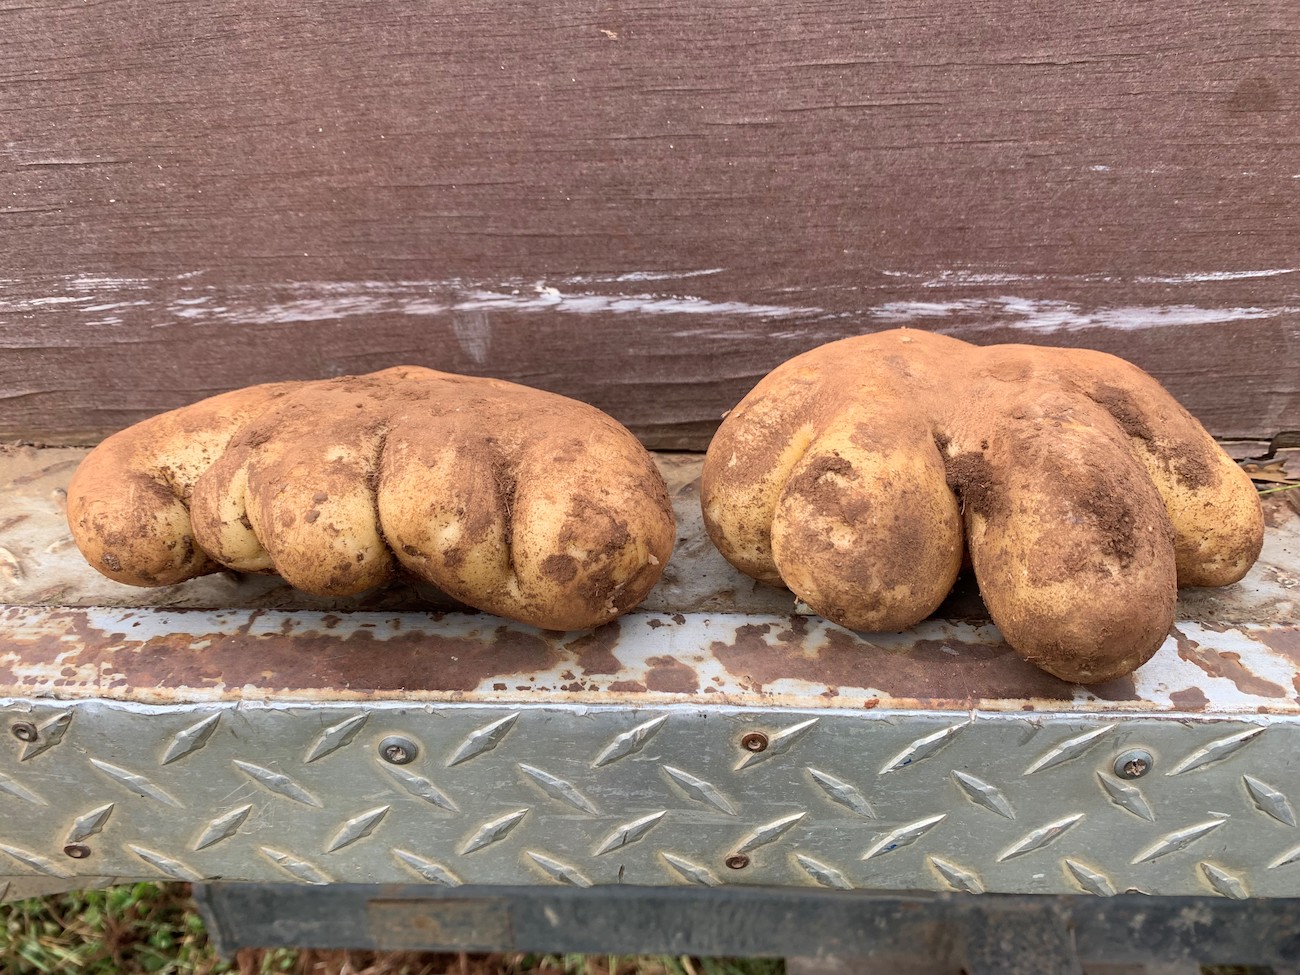 Pota-toes part of Trentham potato harvest